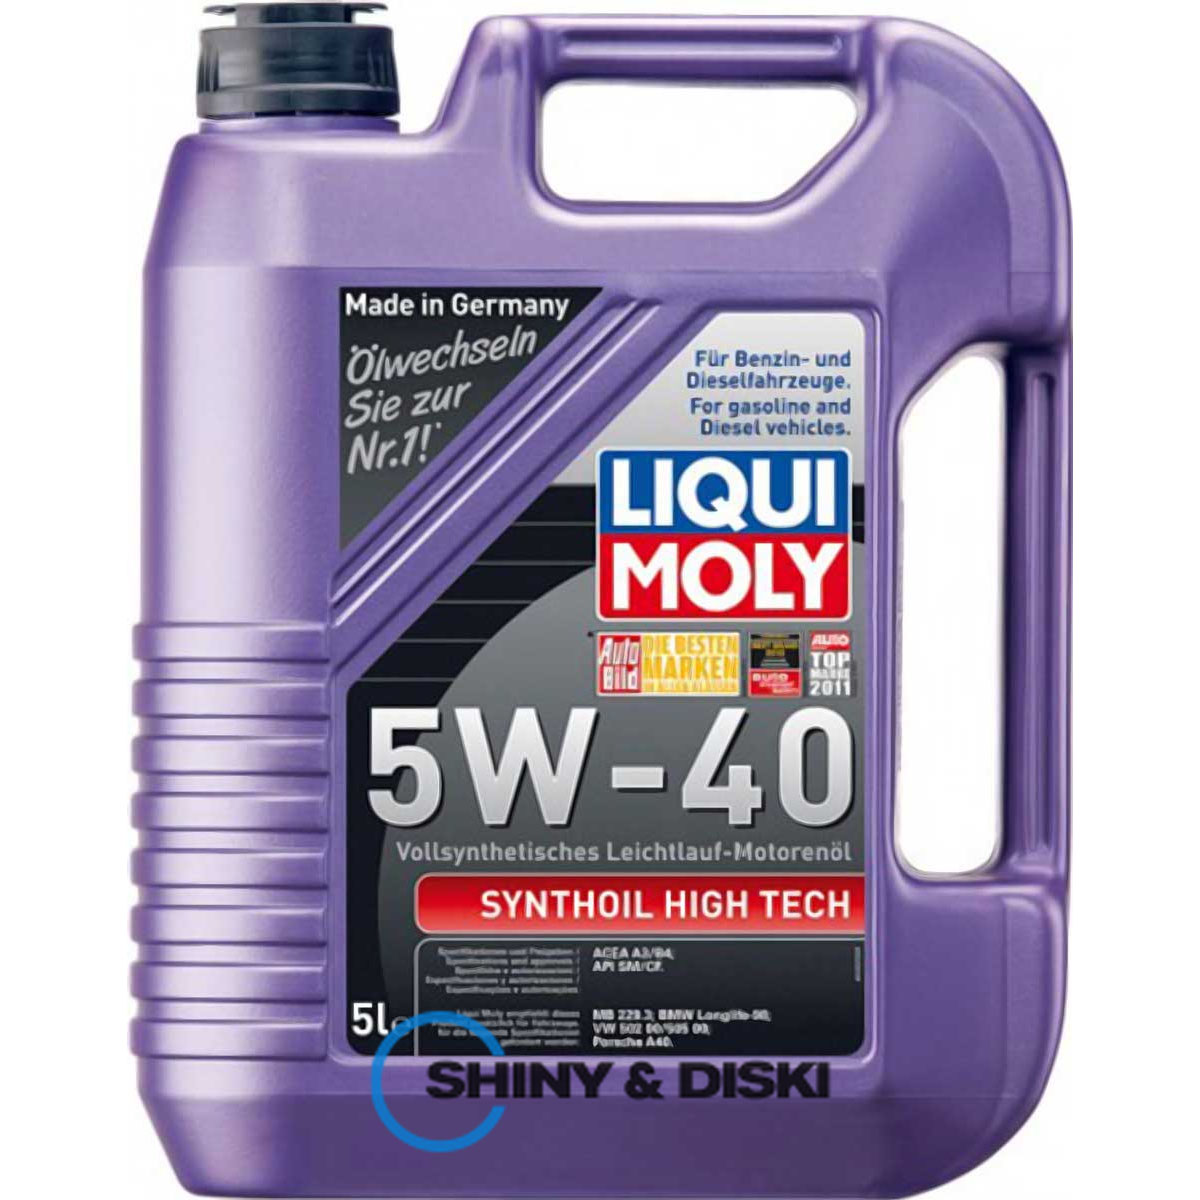 liqui moly synthoil high tech 5w-40 (5л)